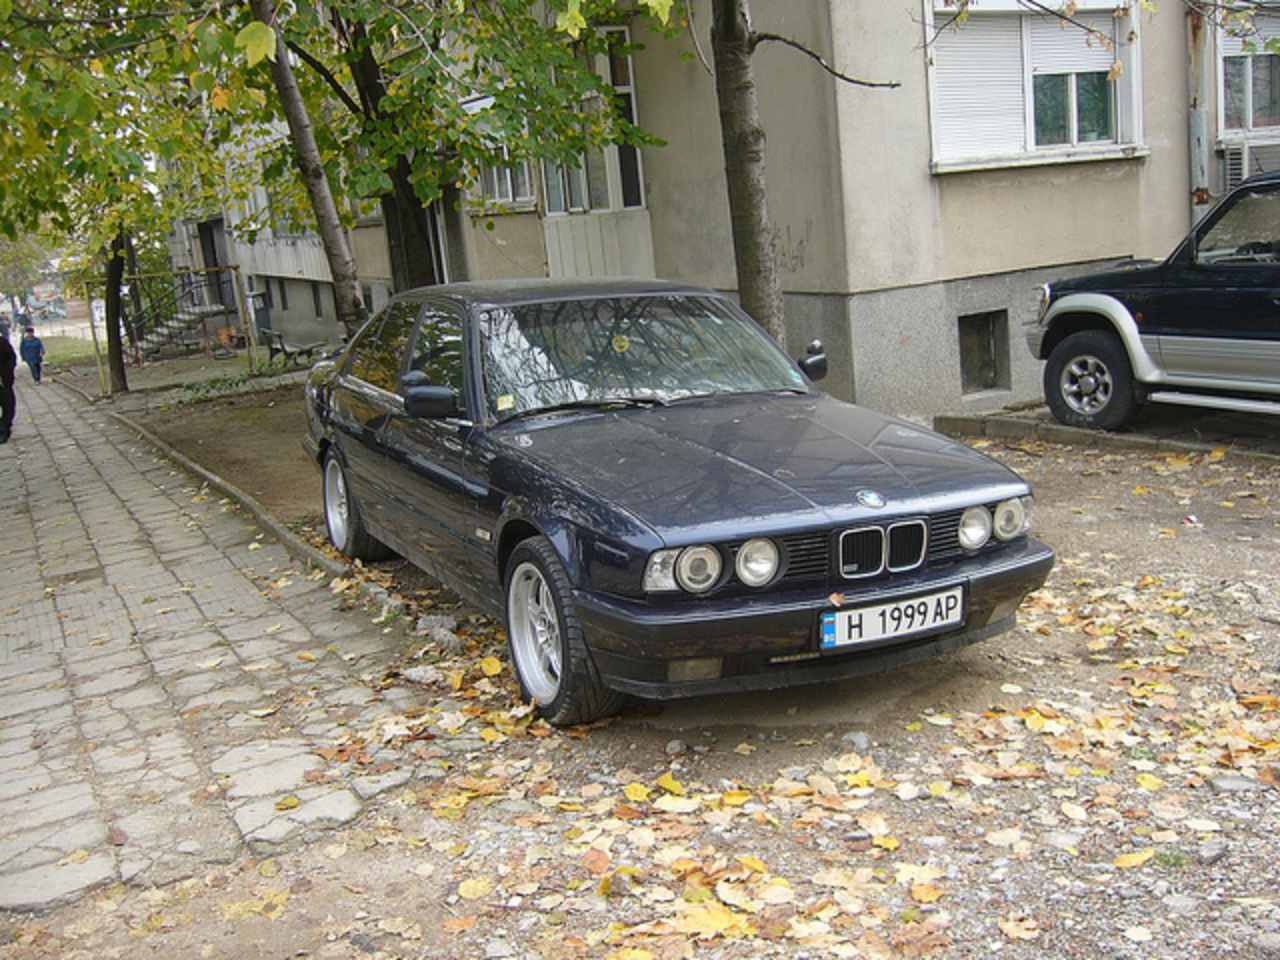 BMW 525 tds E34 | Flickr - Photo Sharing!